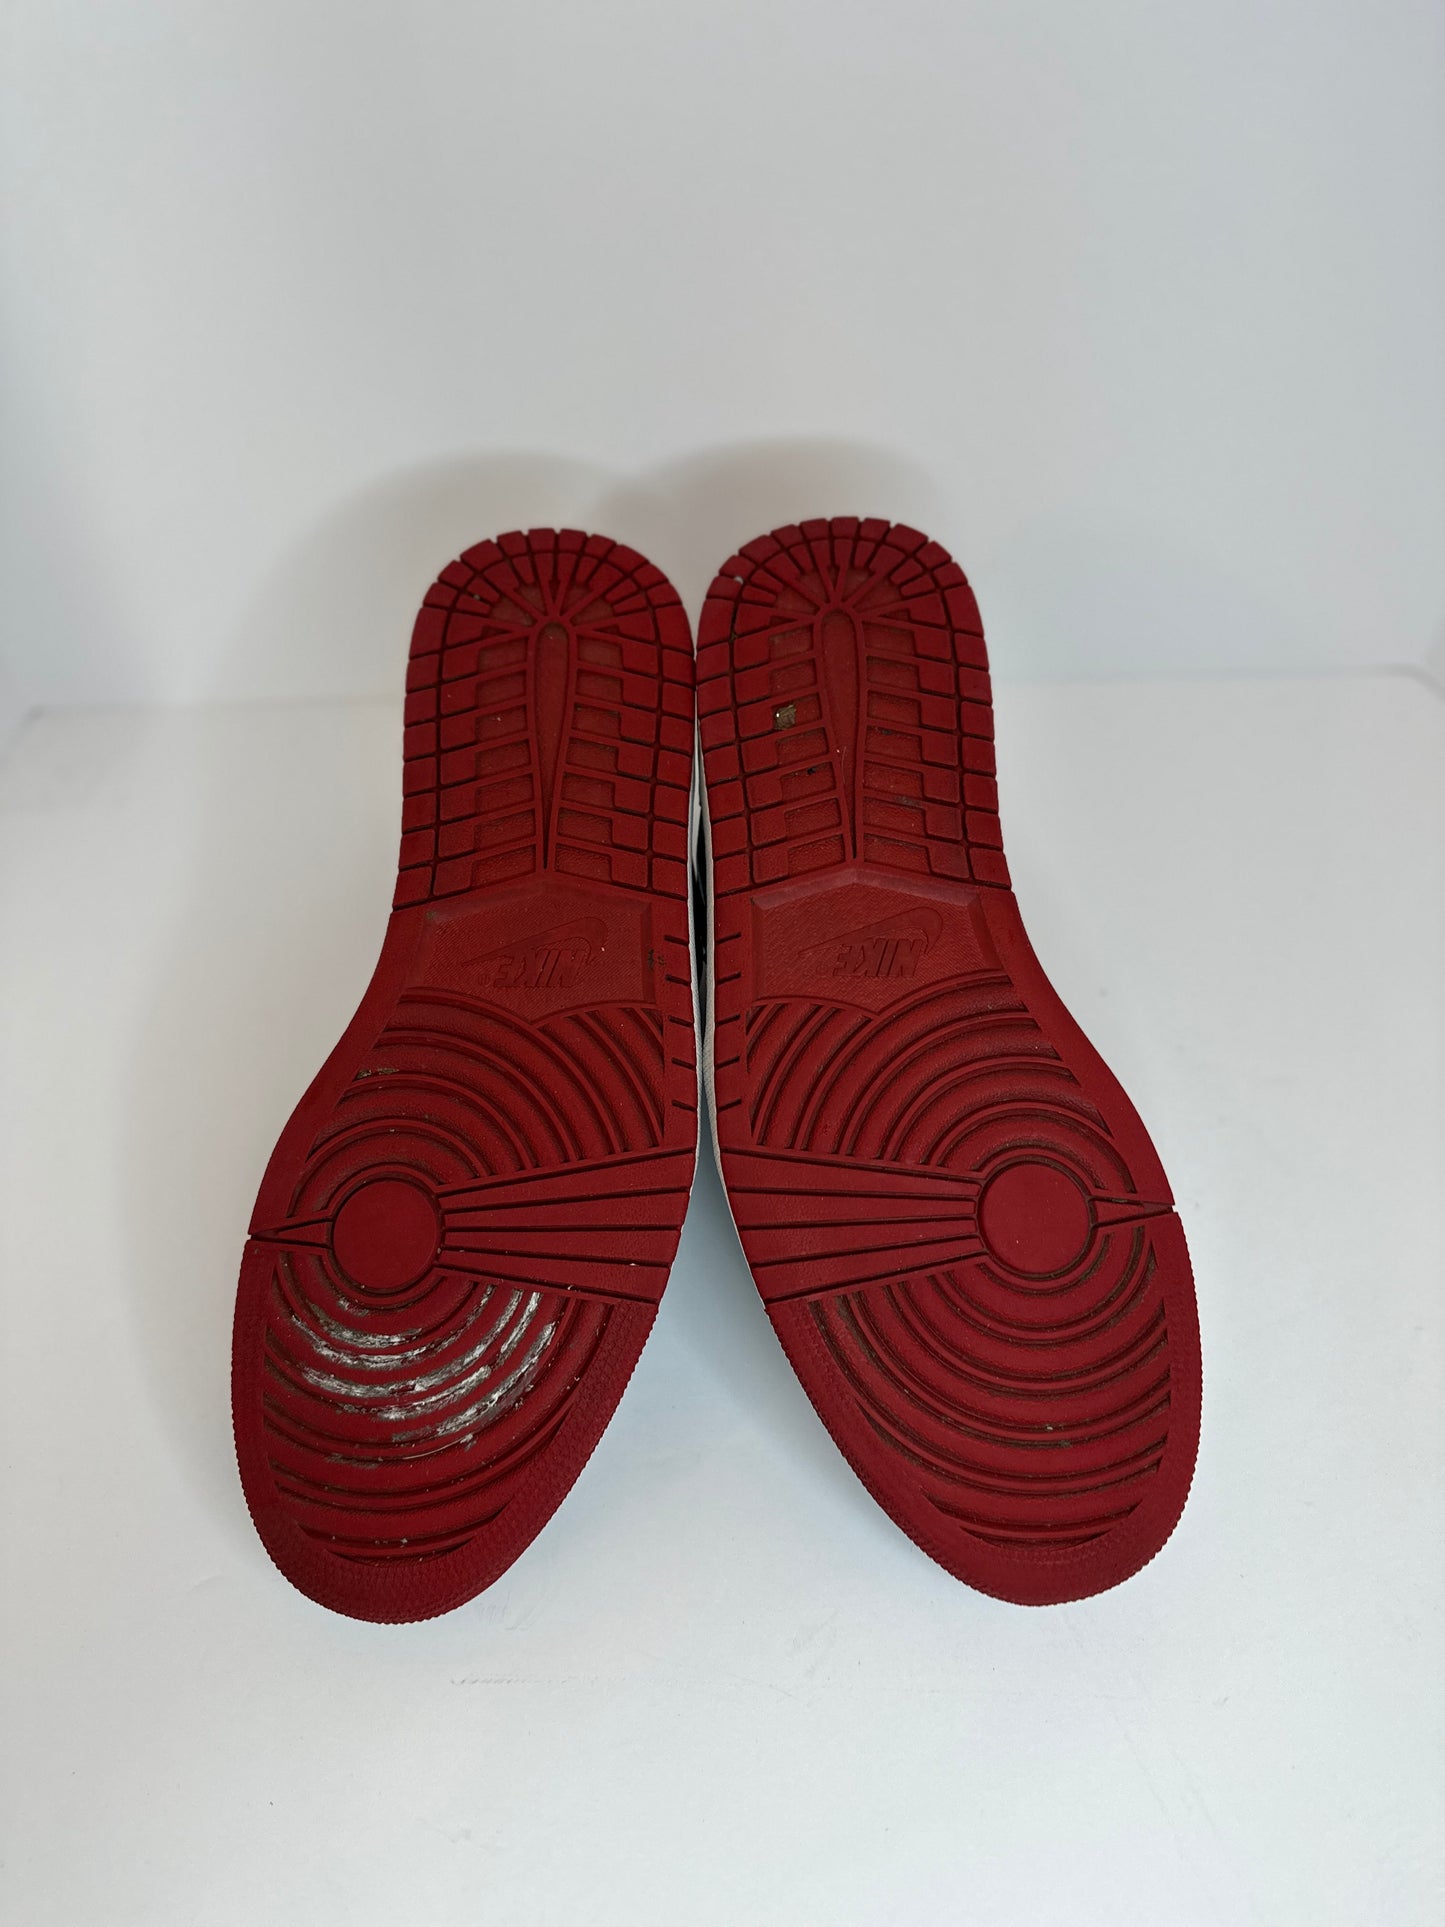 Jordan 1 Low Black Toe (2019) Size 13 Used